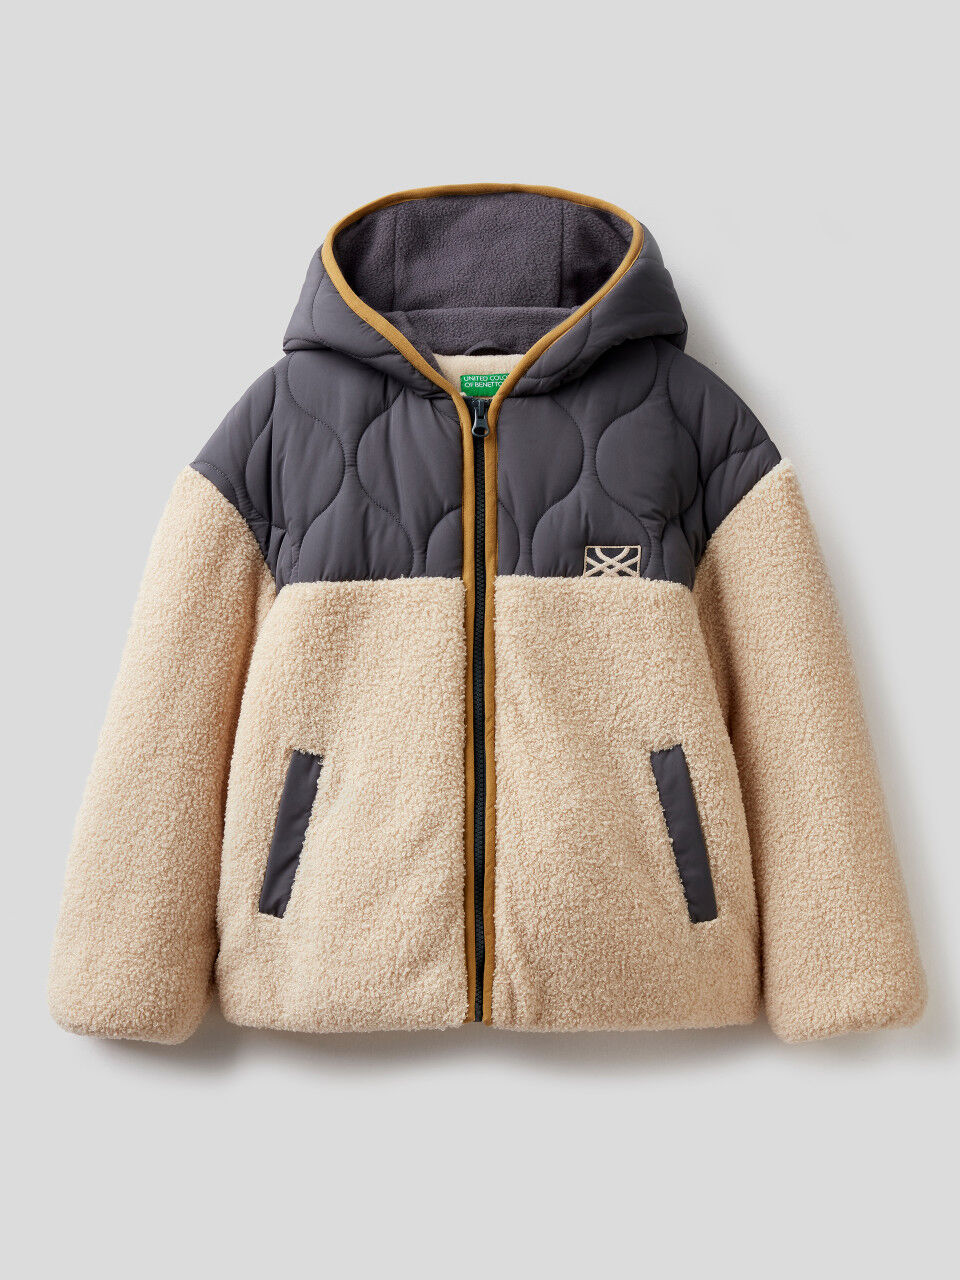 KIDS FASHION Jackets Casual Benetton jacket discount 97% White 53                  EU 